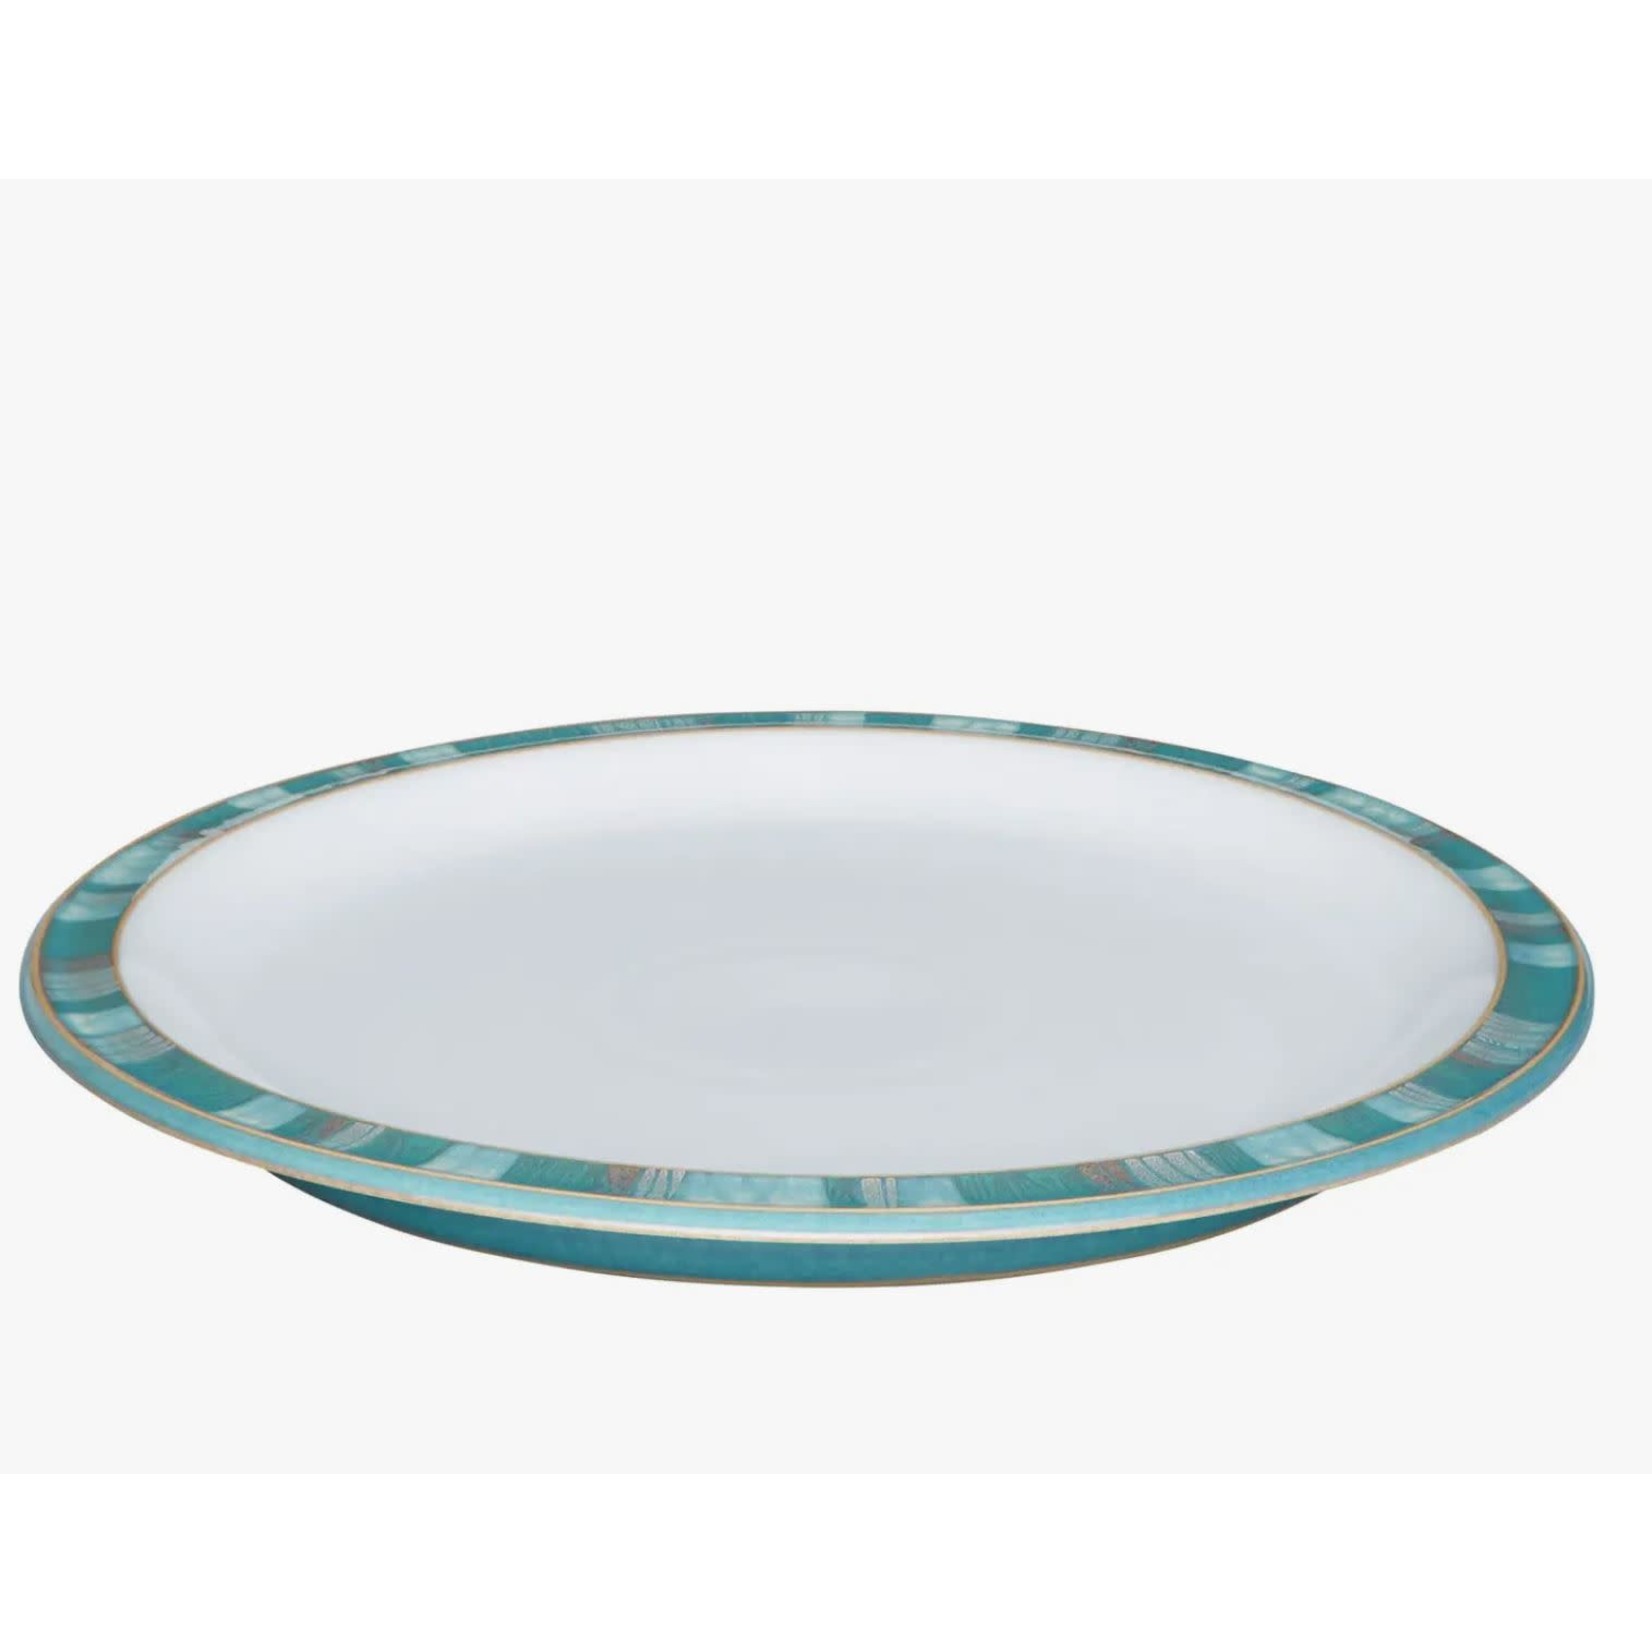 Mickler & Co. Azure Sands Dinner Plate